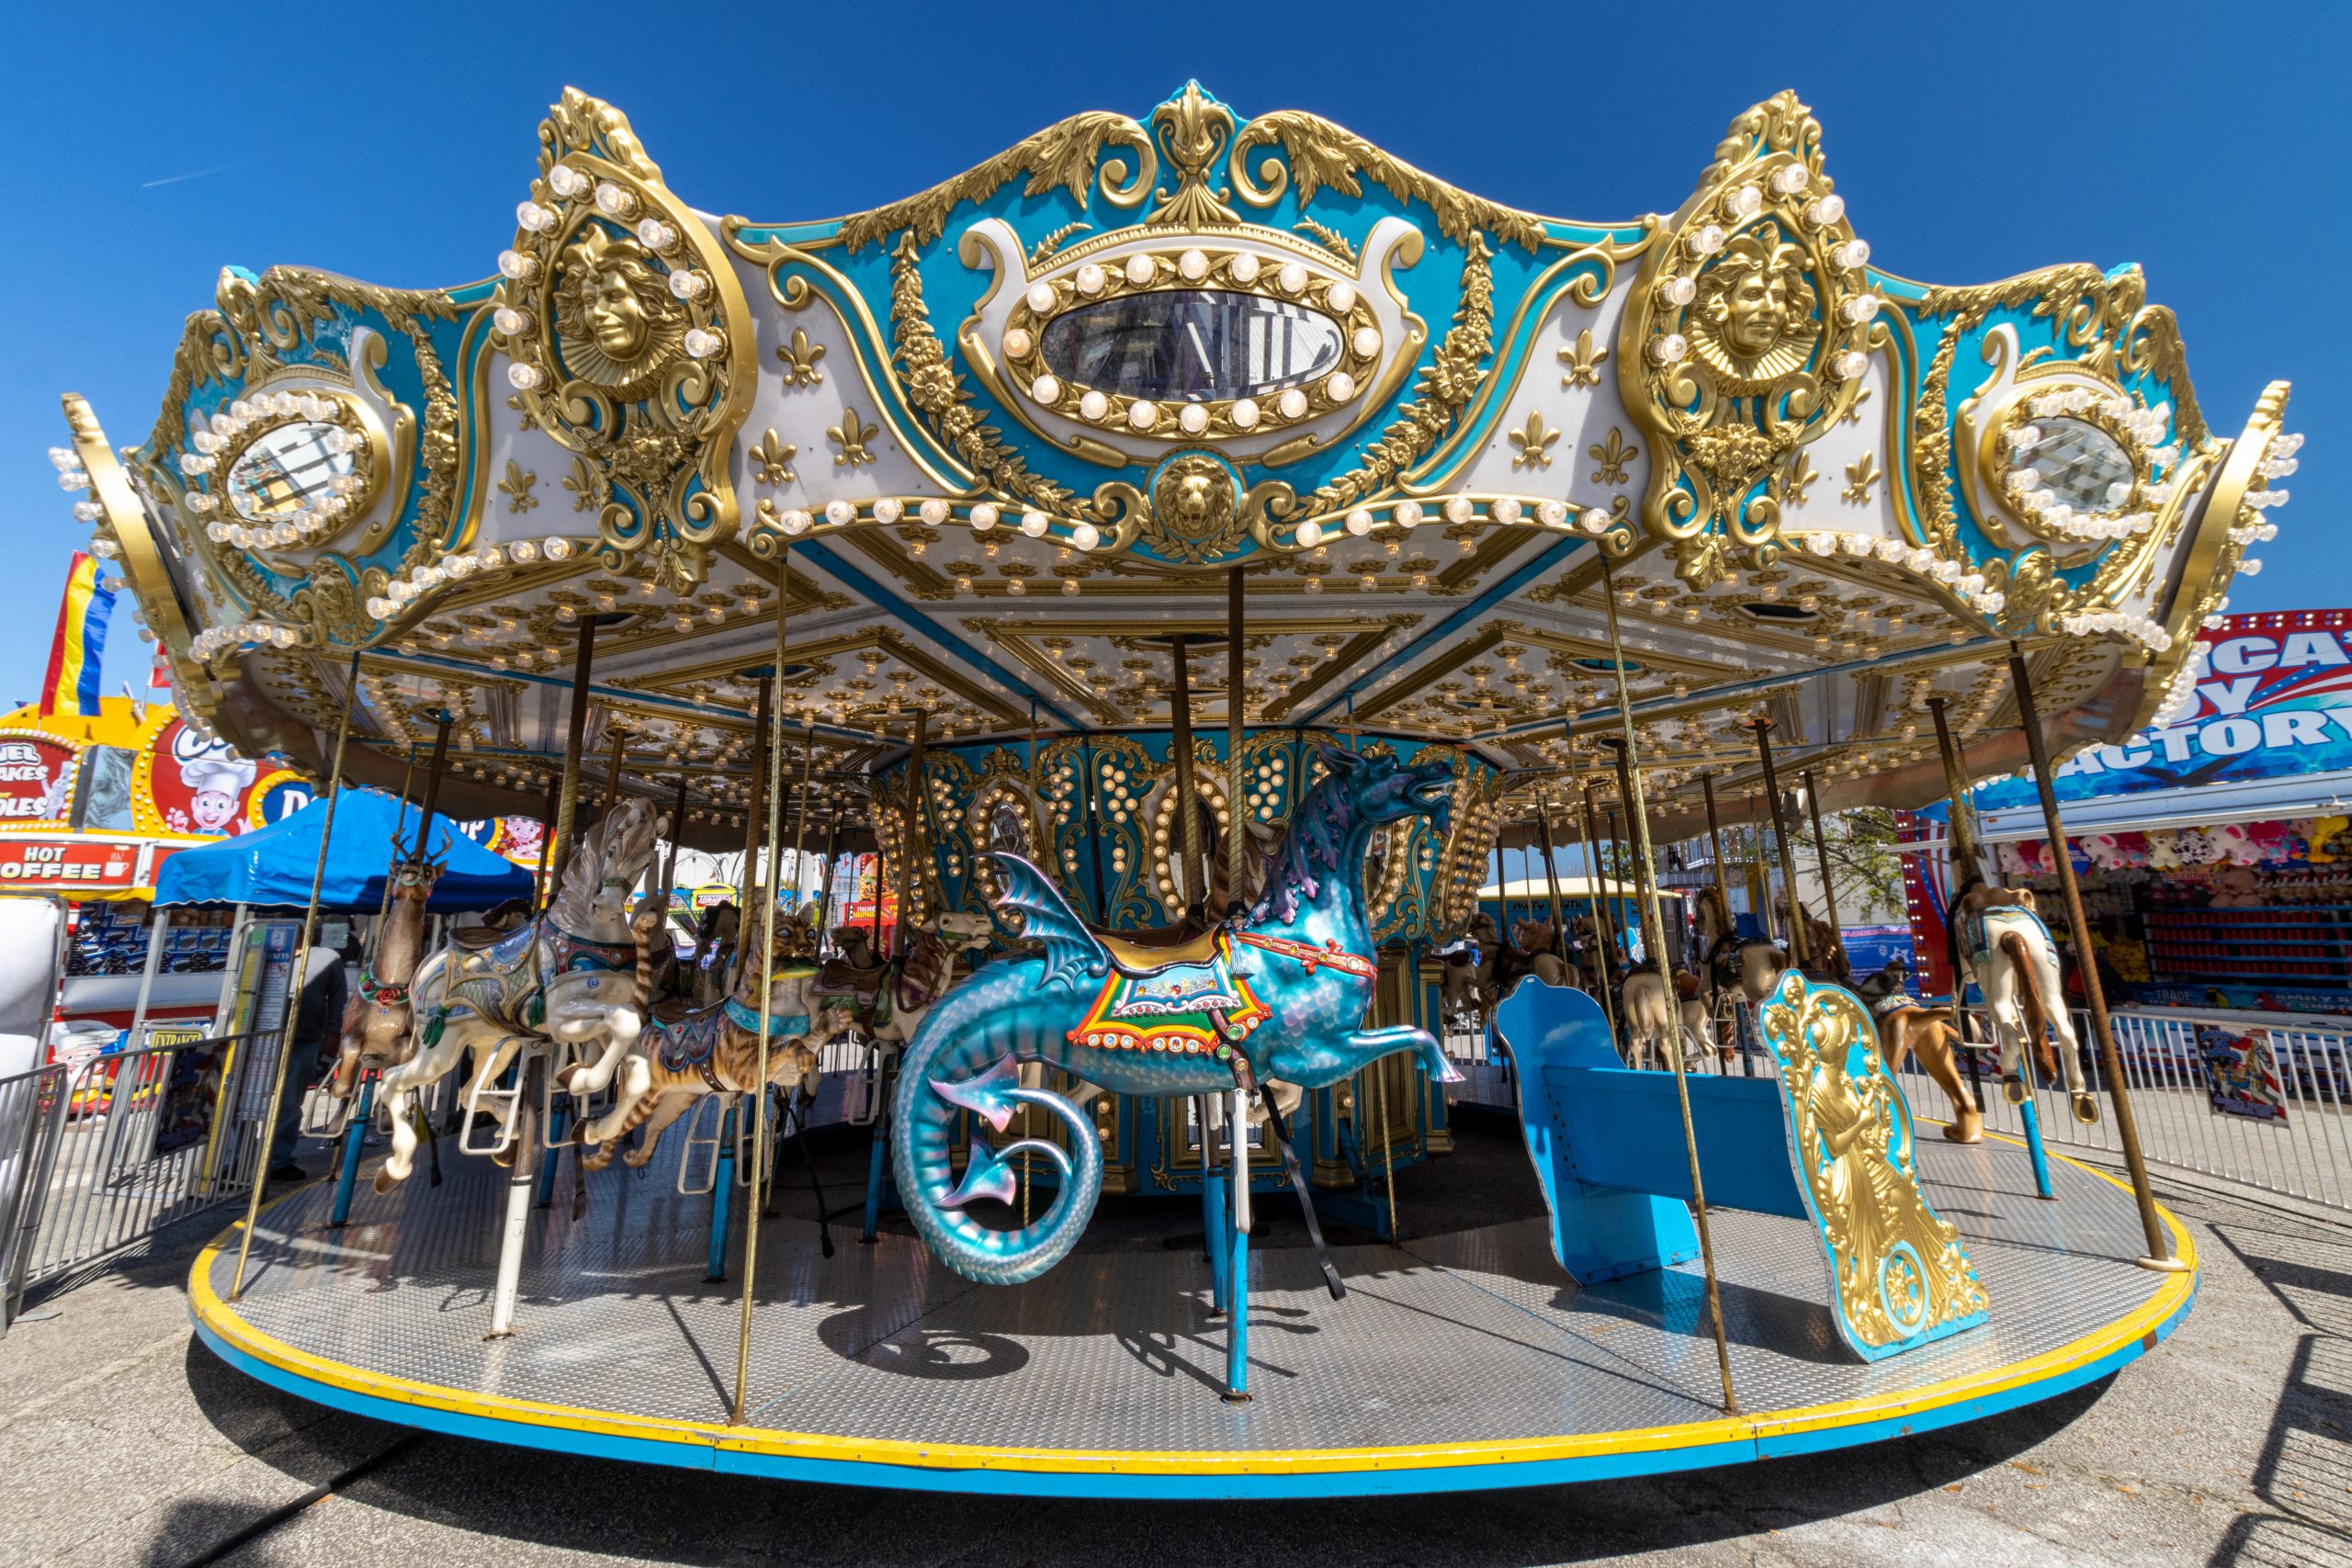 Grand Carousel - Dreamland Amusements